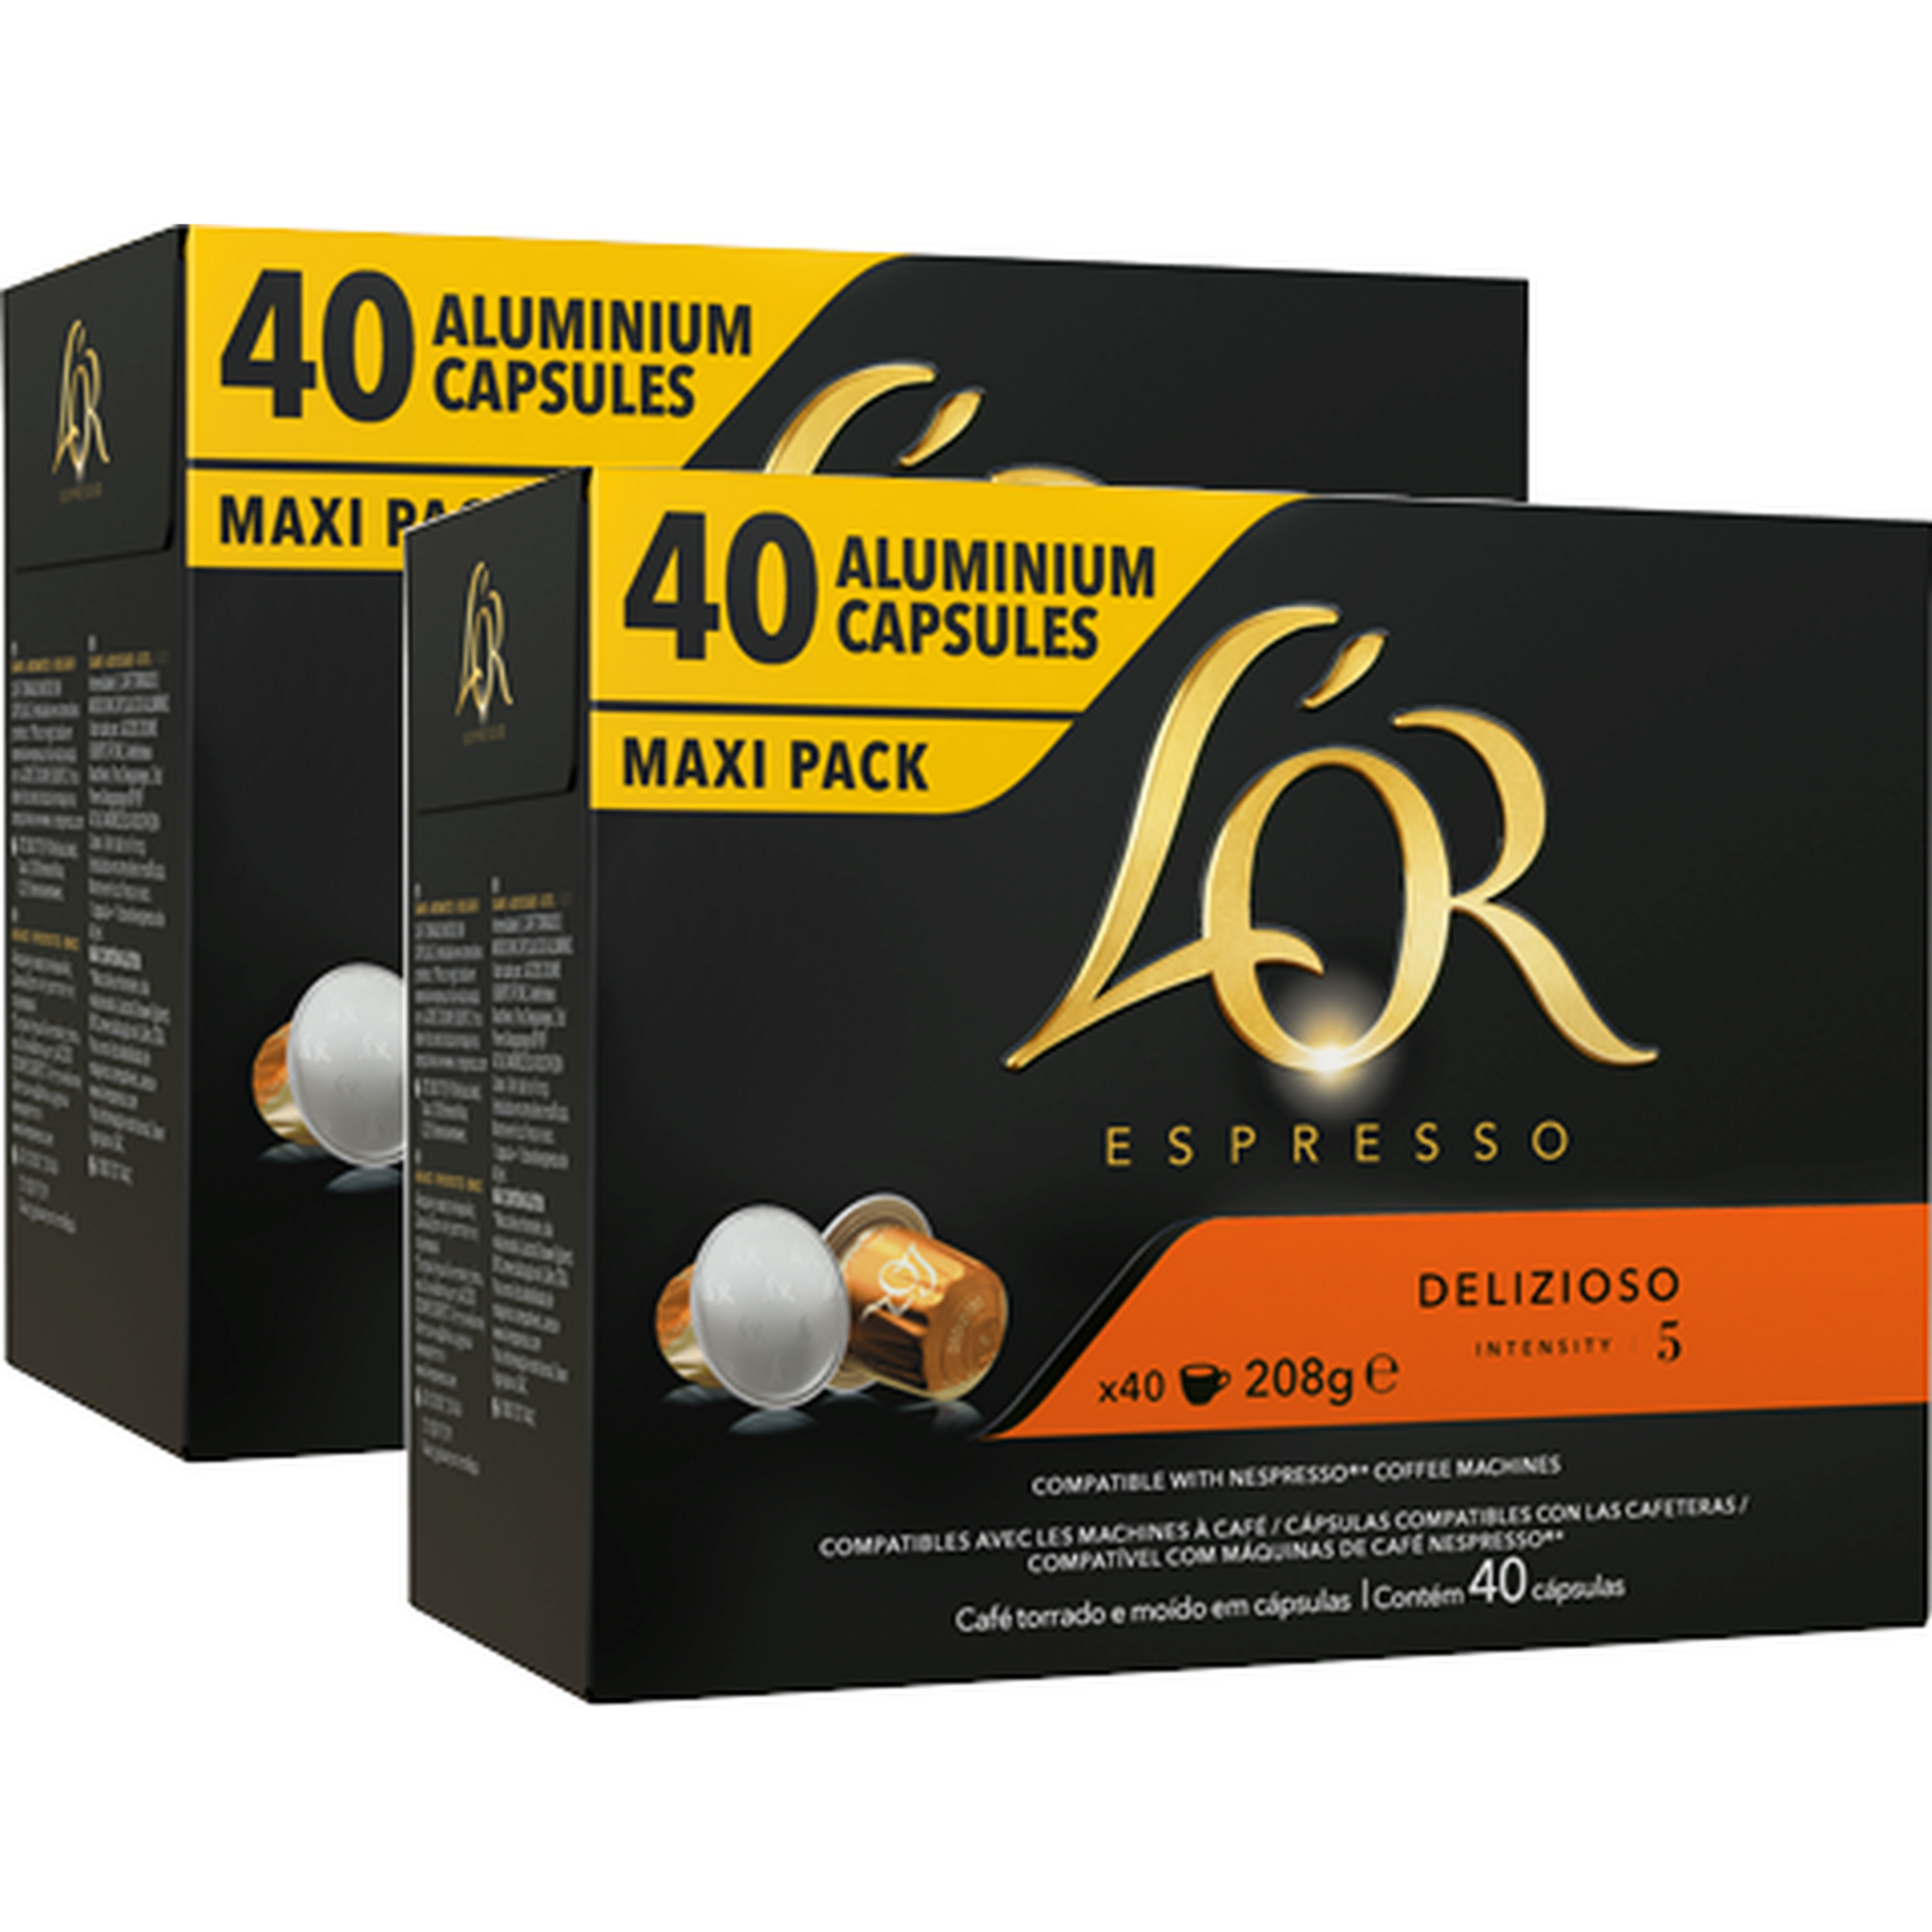 L'OR Espresso capsules de café Delizioso intensité 5 compatibles